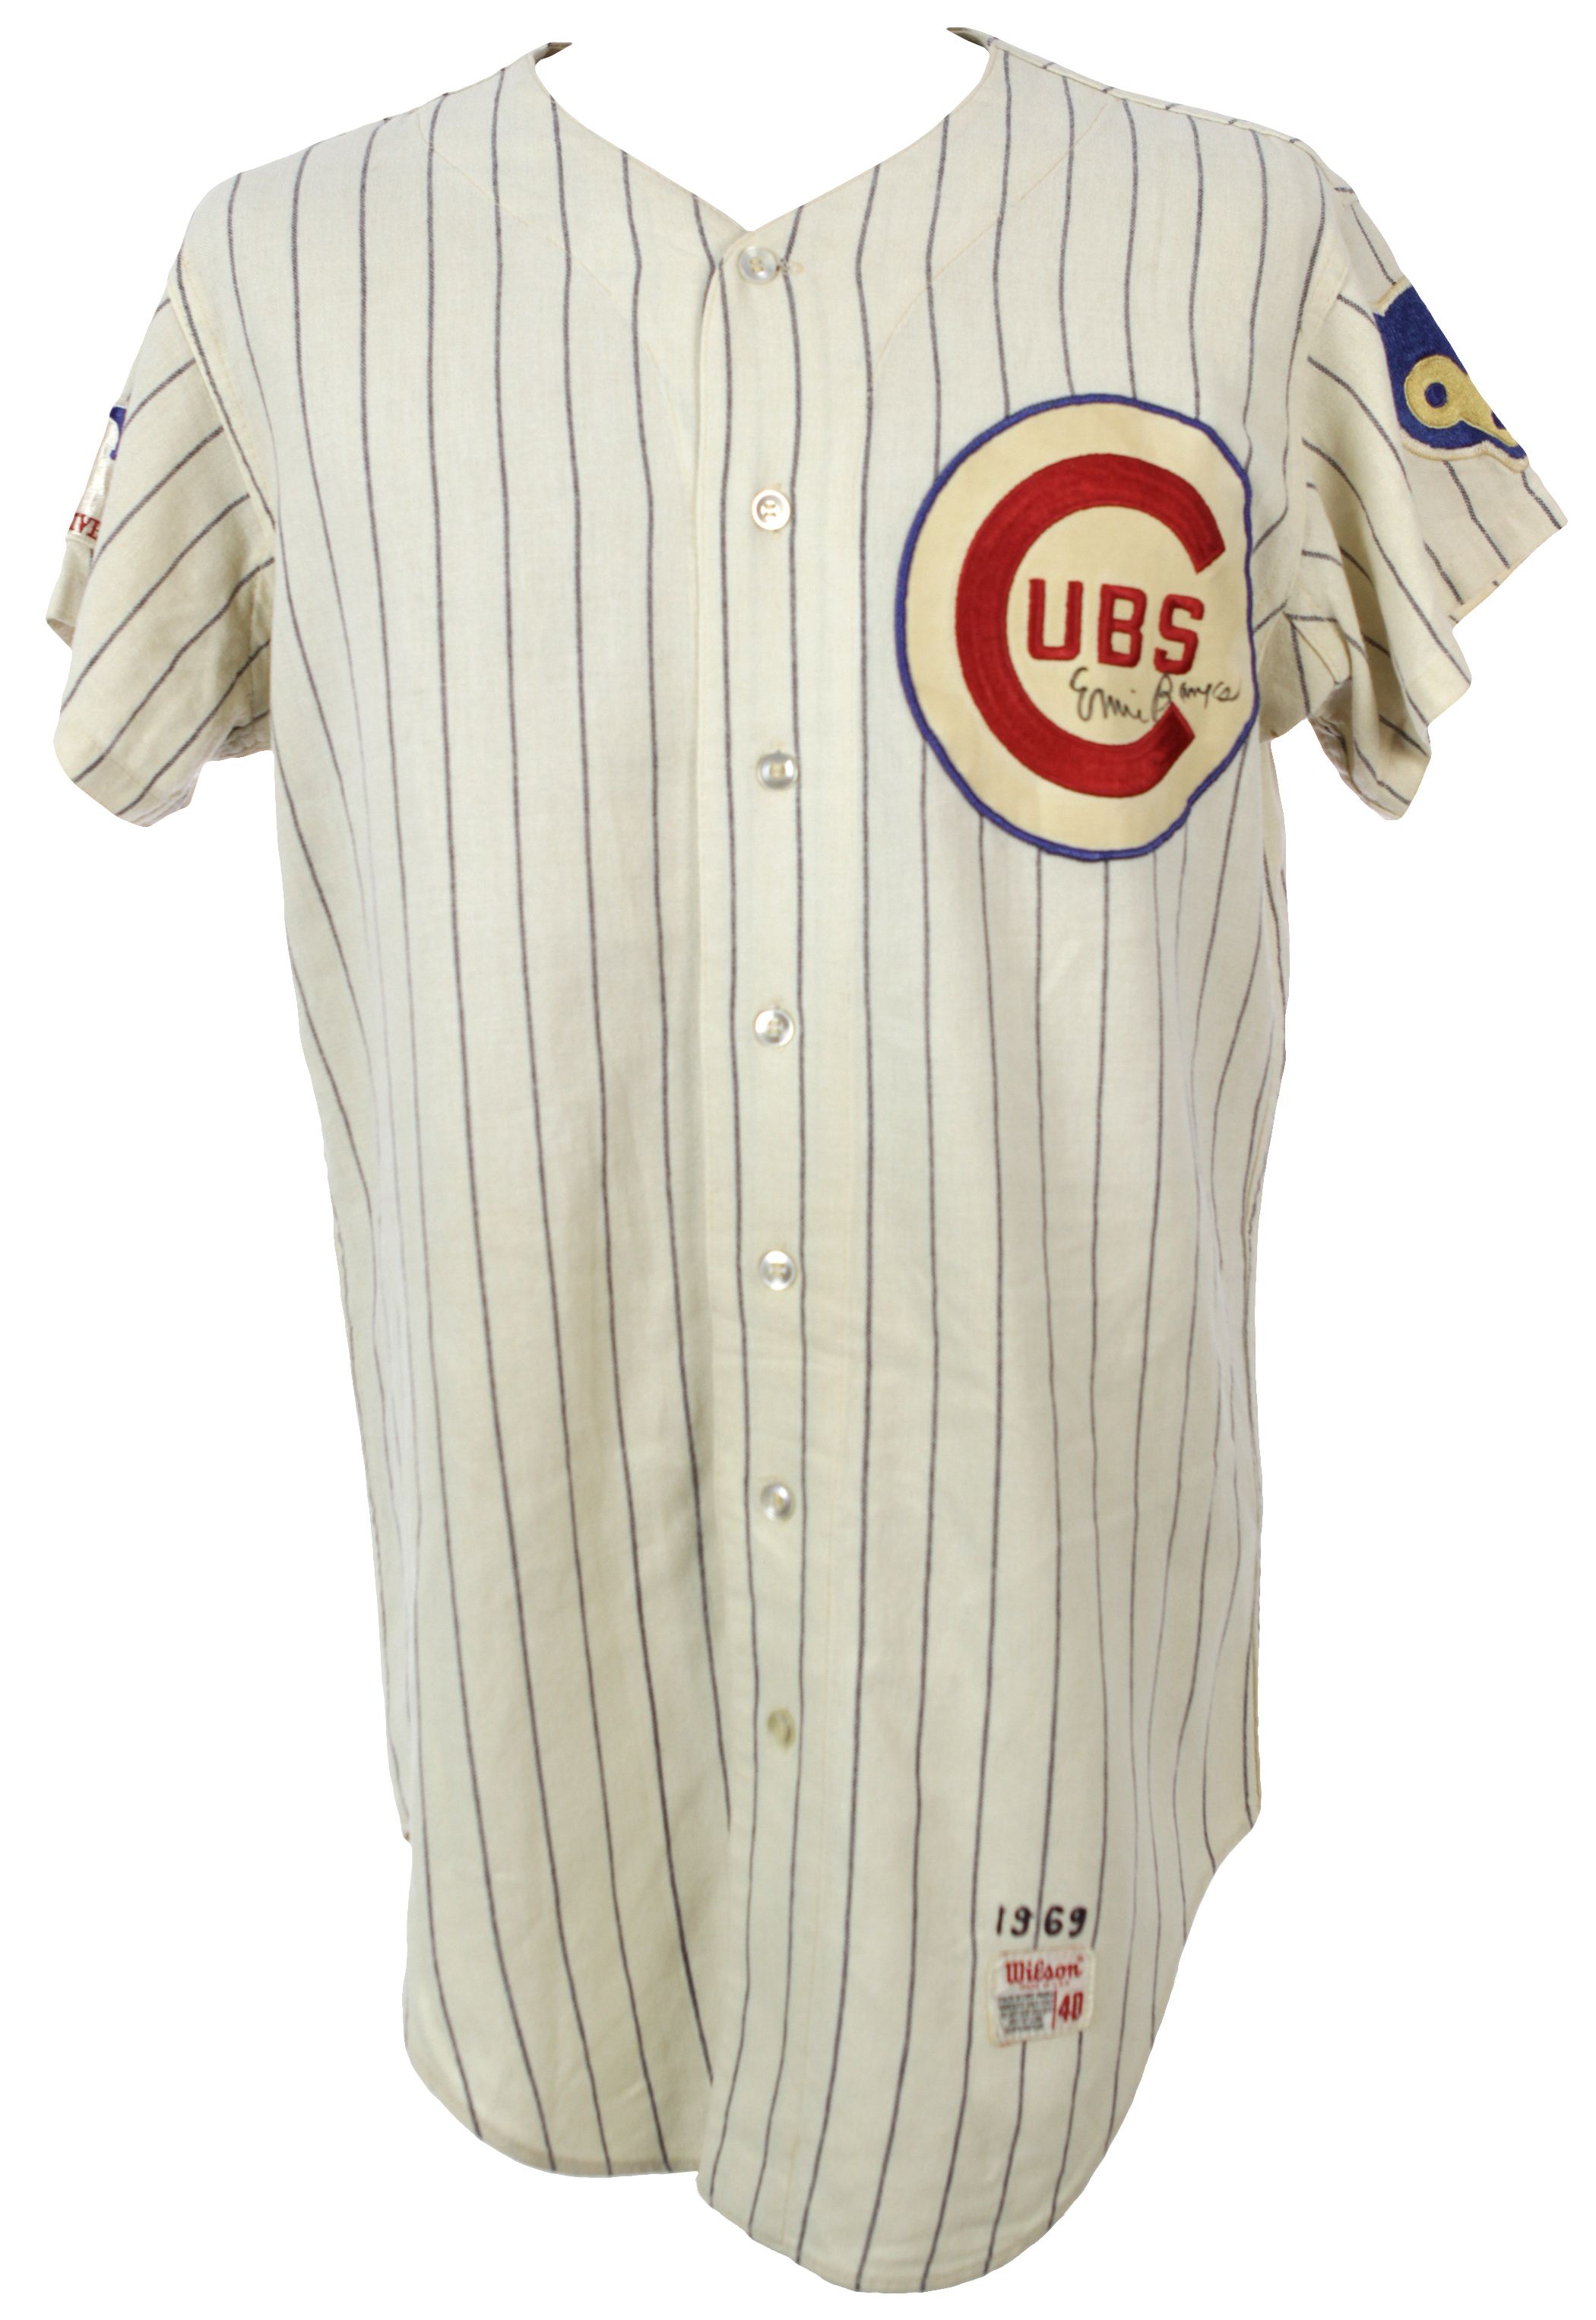 1969 replica jersey cubs